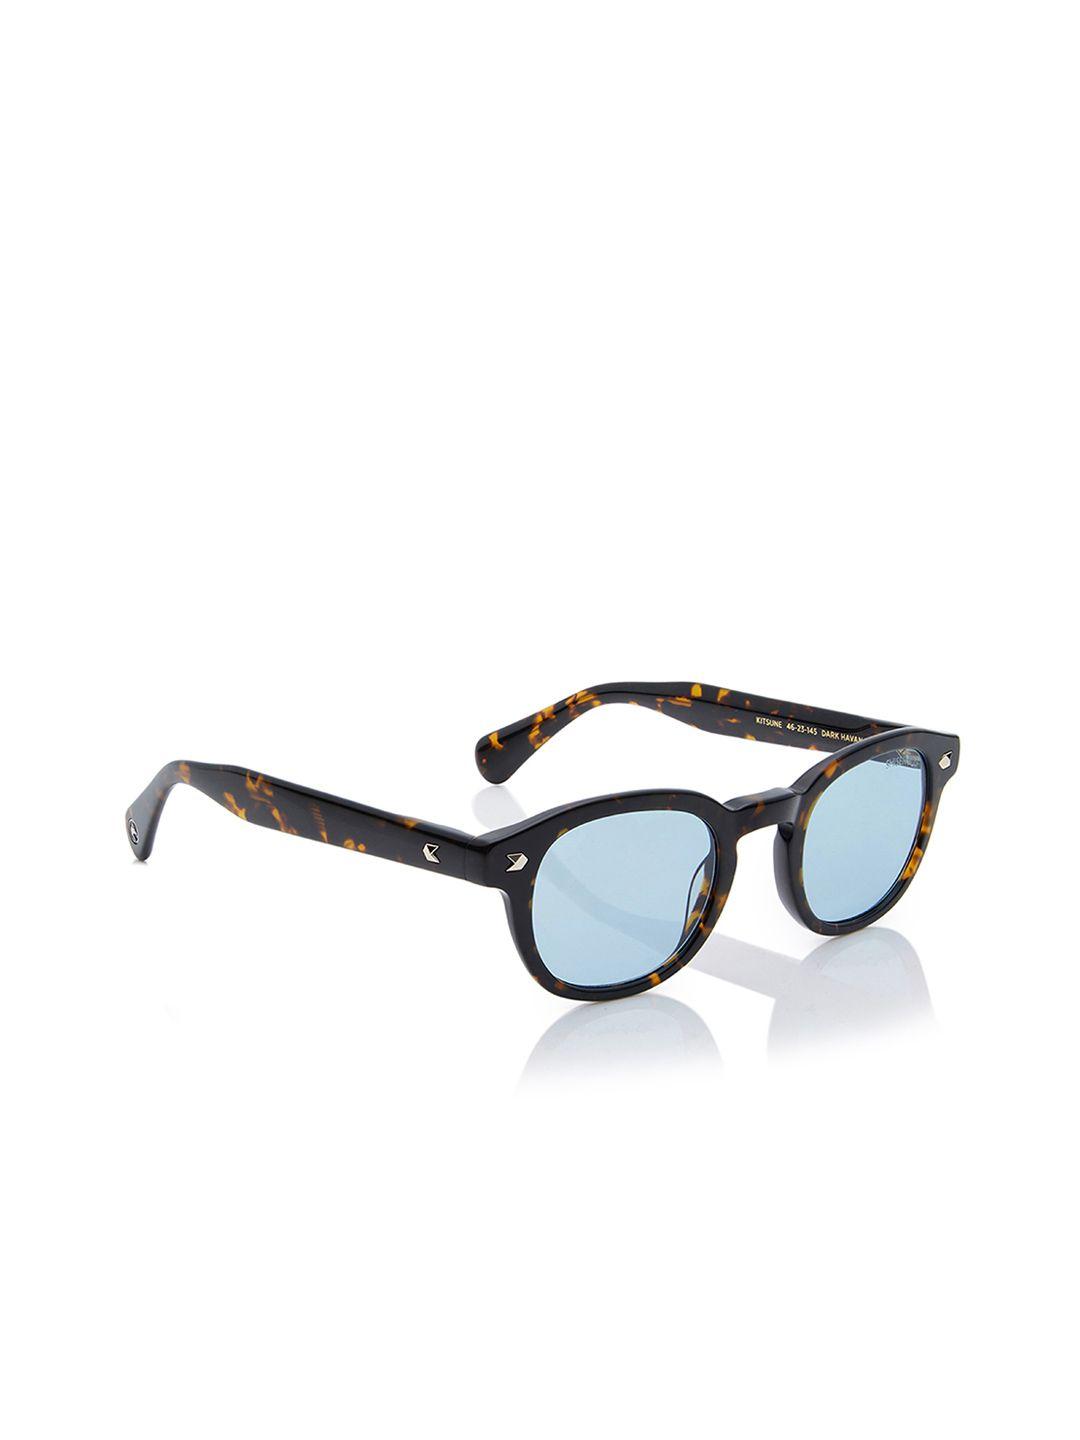 shisen fox unisex oval sunglasses with uv protected lens